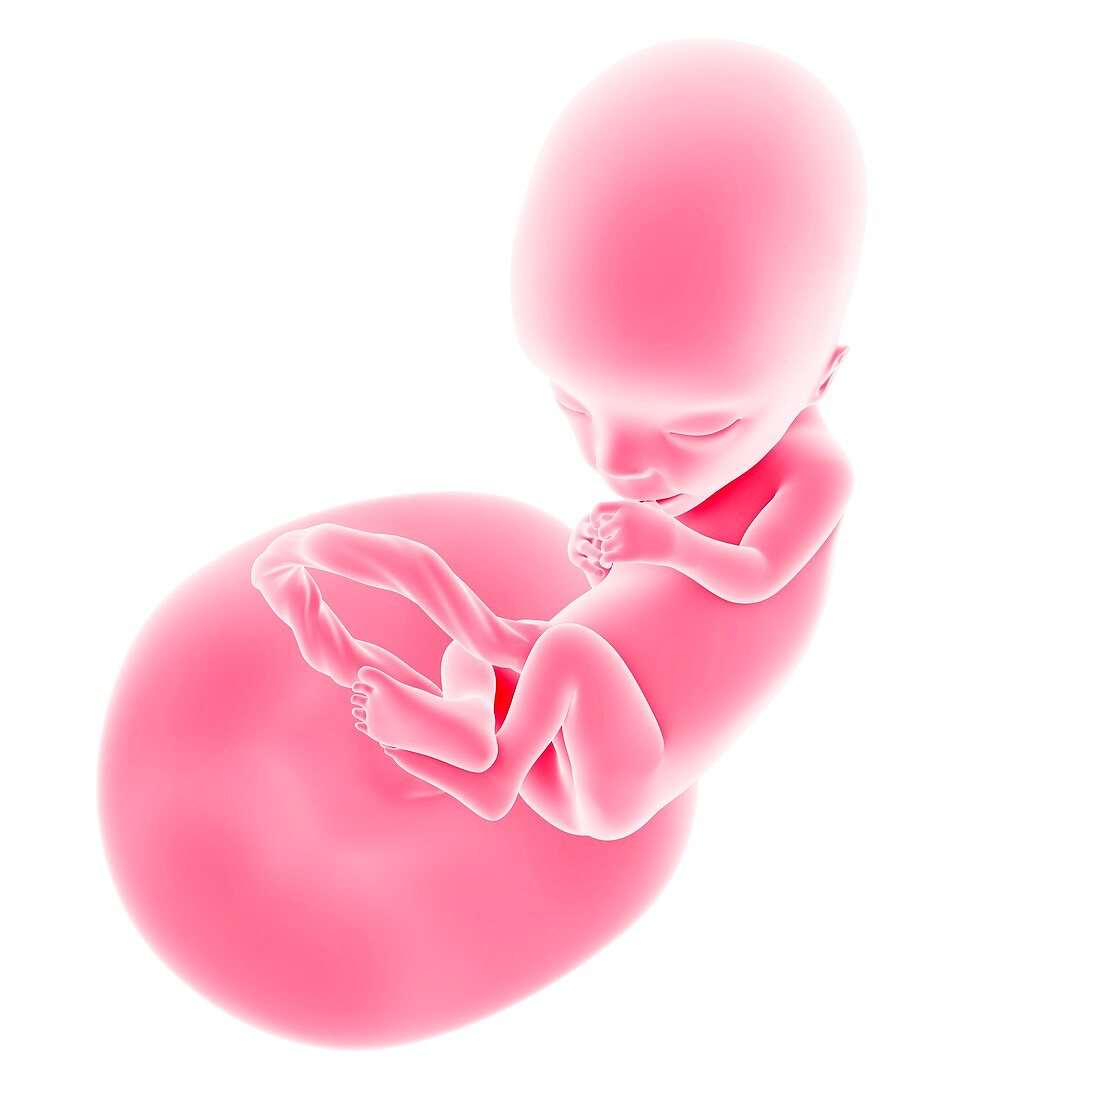 Human fetus age 13 weeks